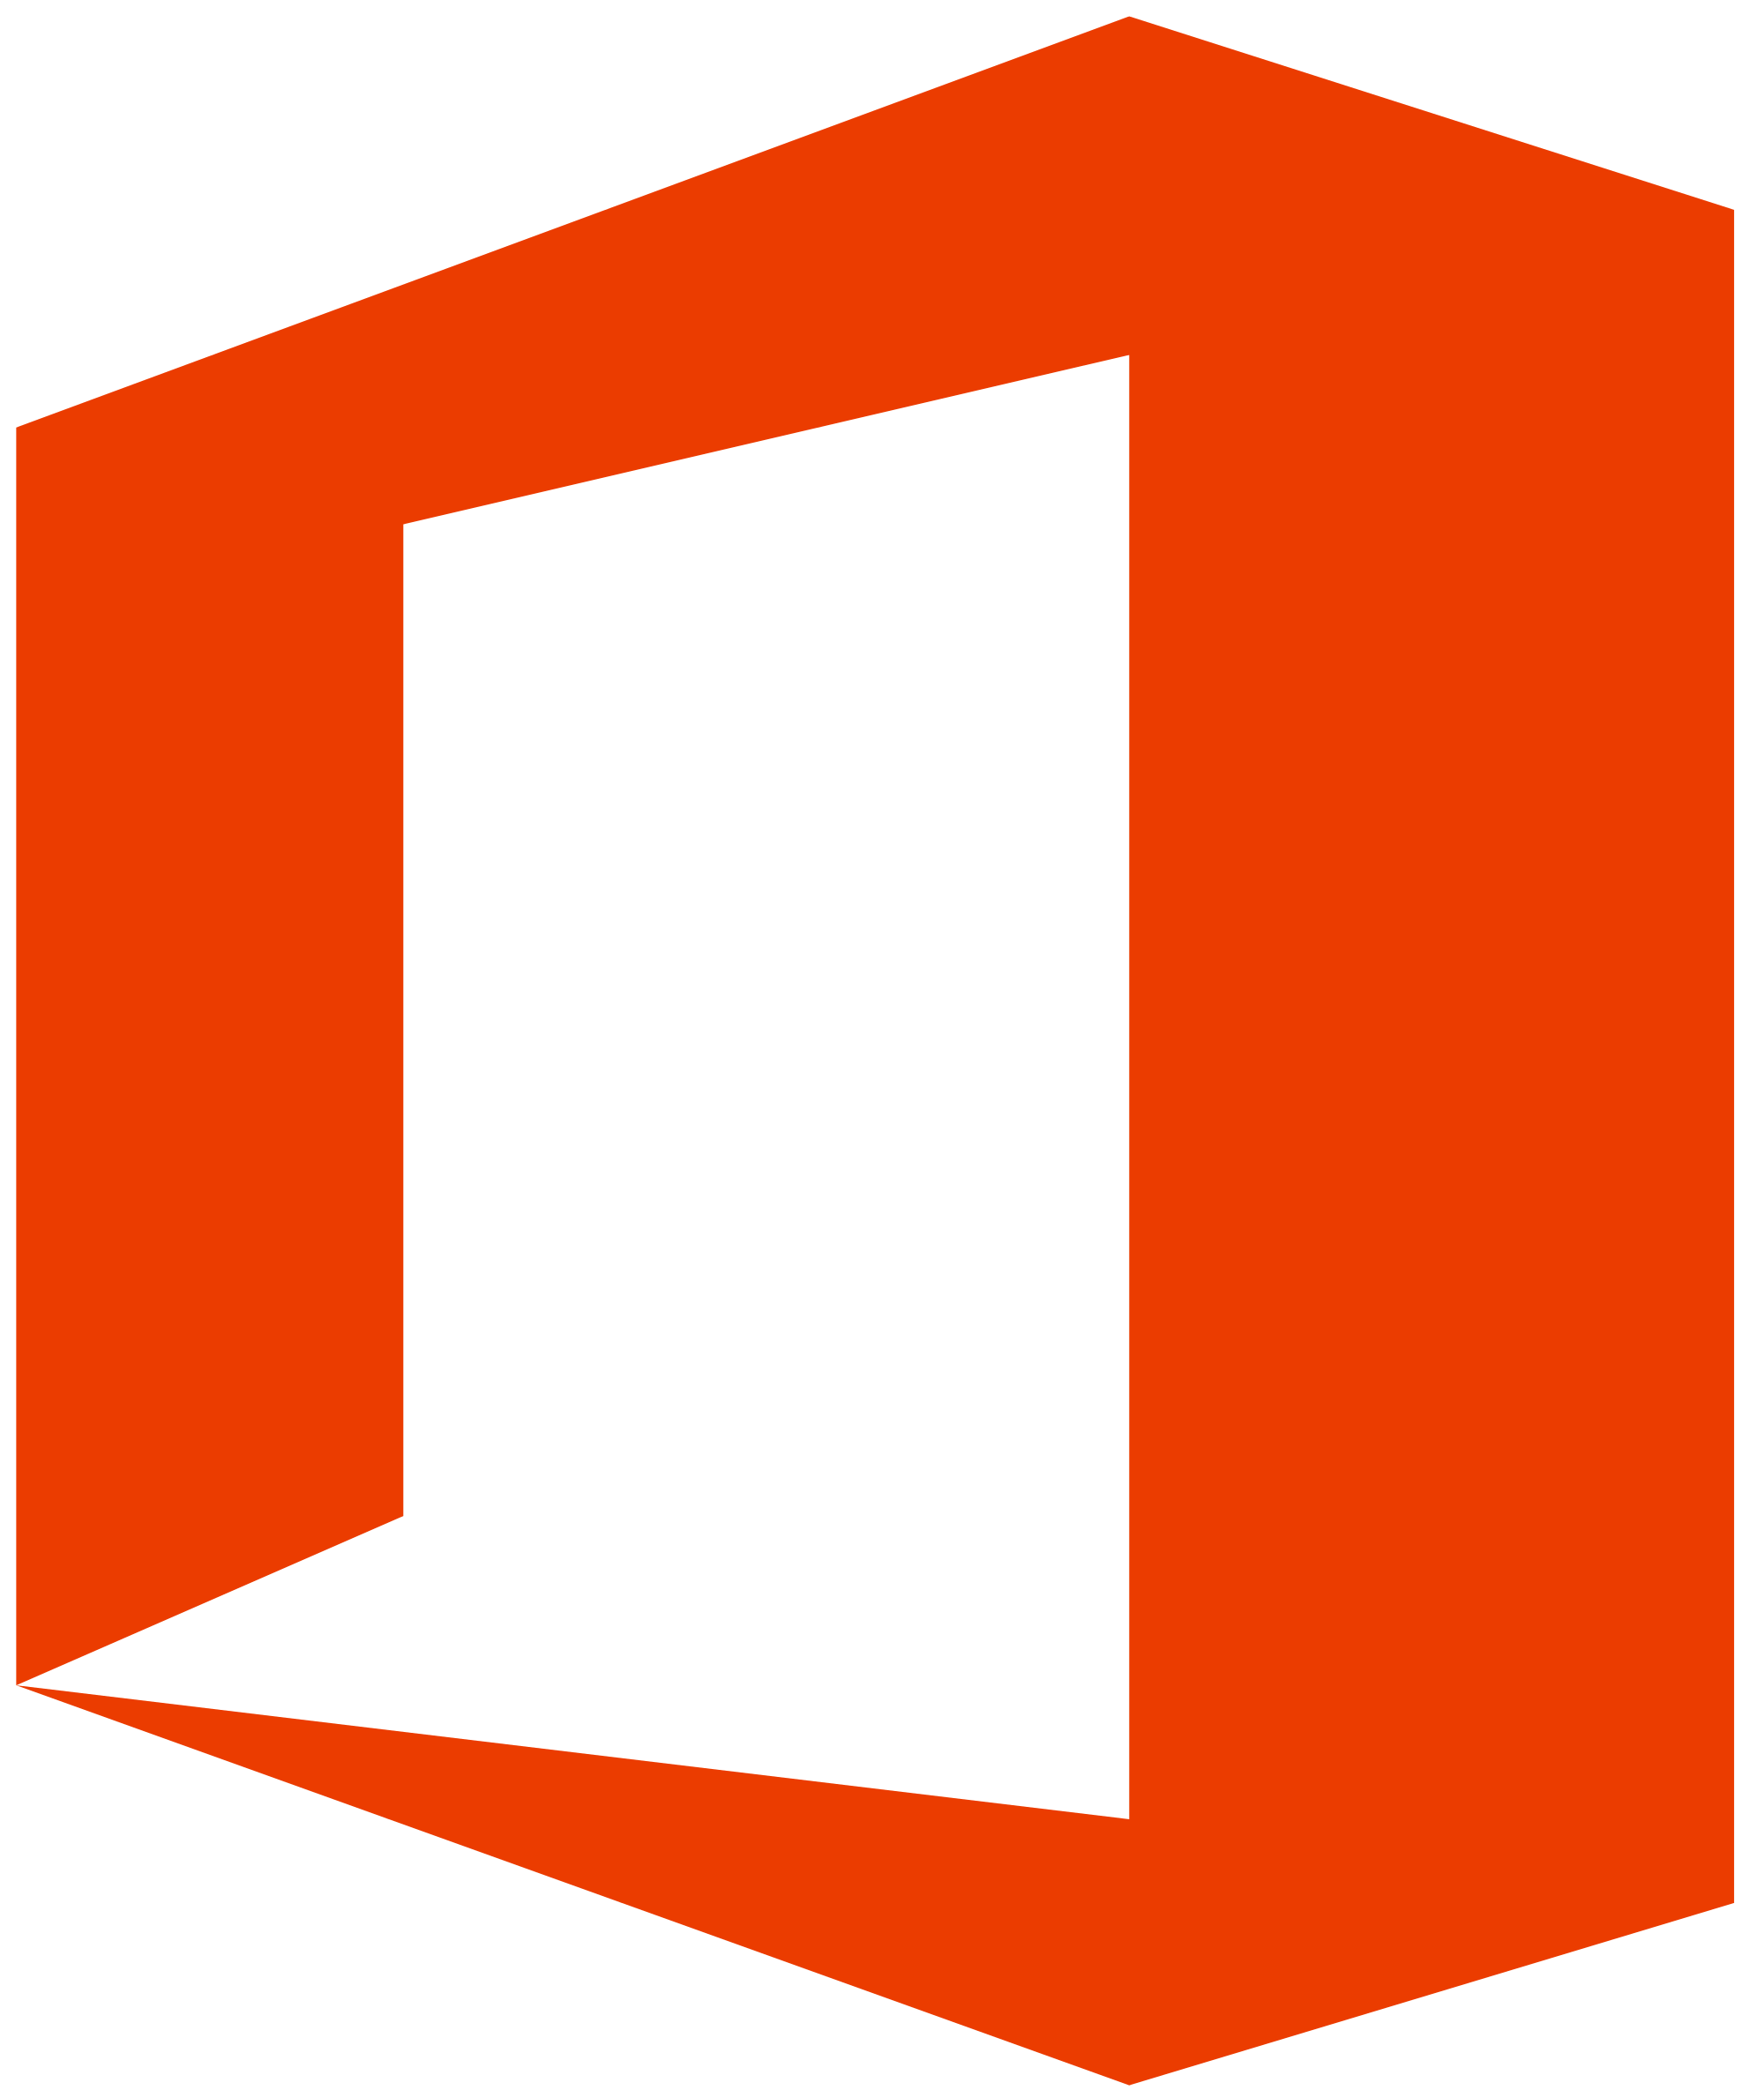 Office Logo - File:Microsoft Office 2013 logo.svg - Wikimedia Commons